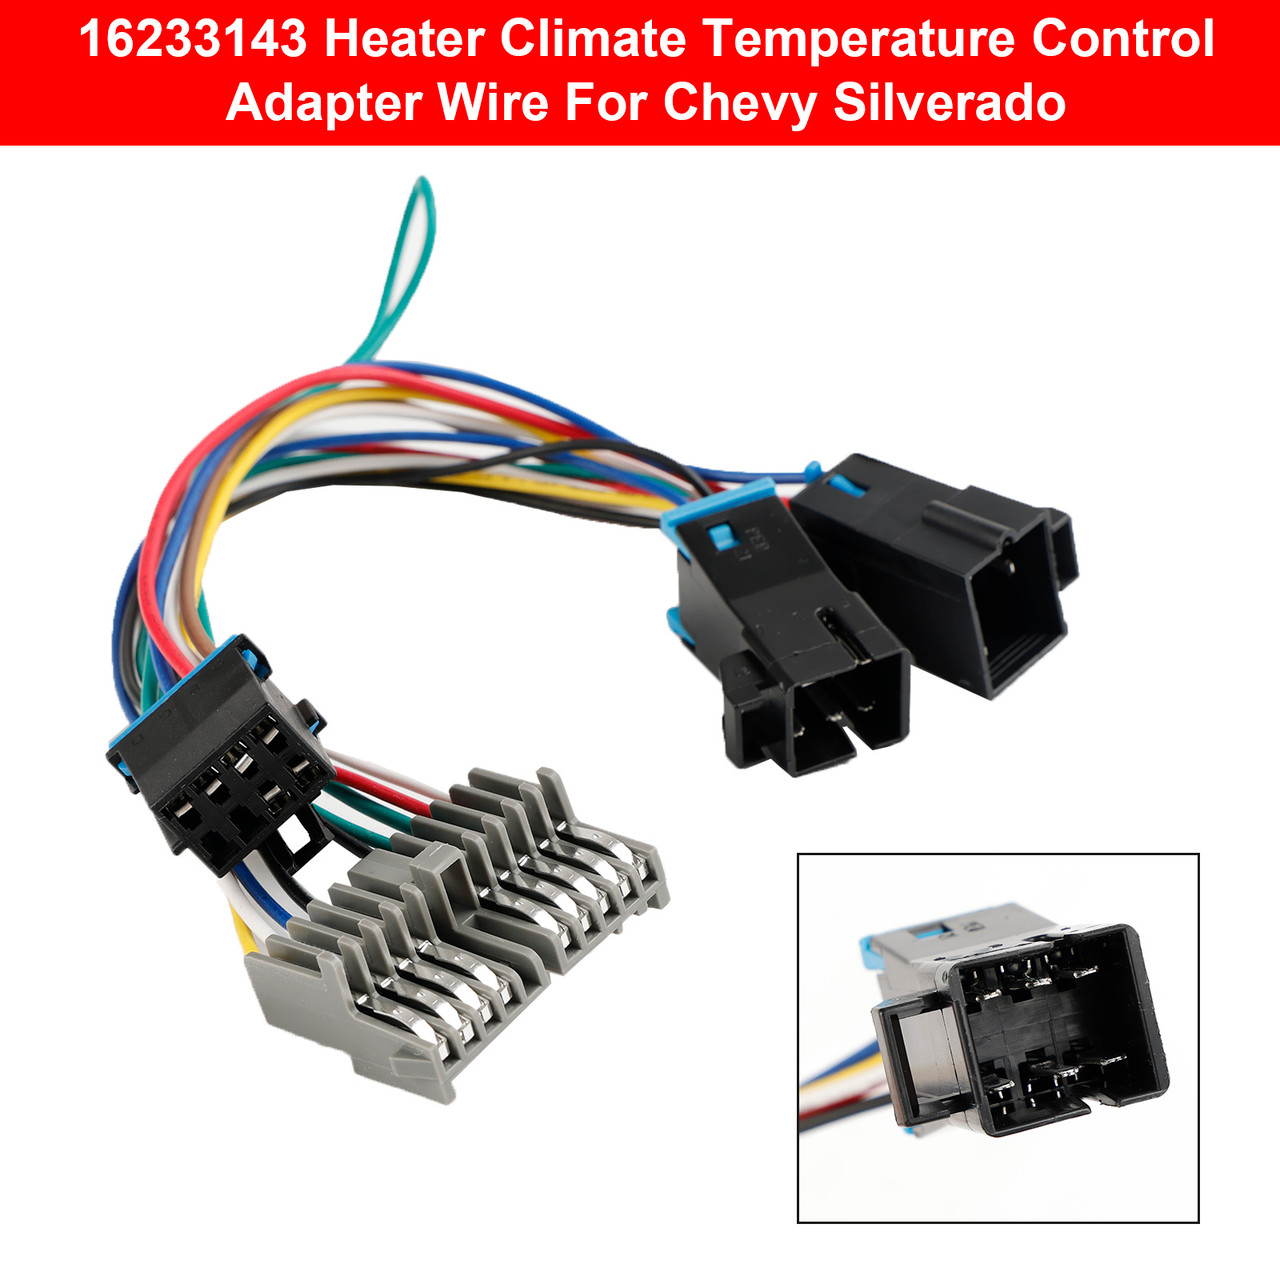 16233143 Heater Climate Temperature Control Adapter Wire For Chevy Silverado